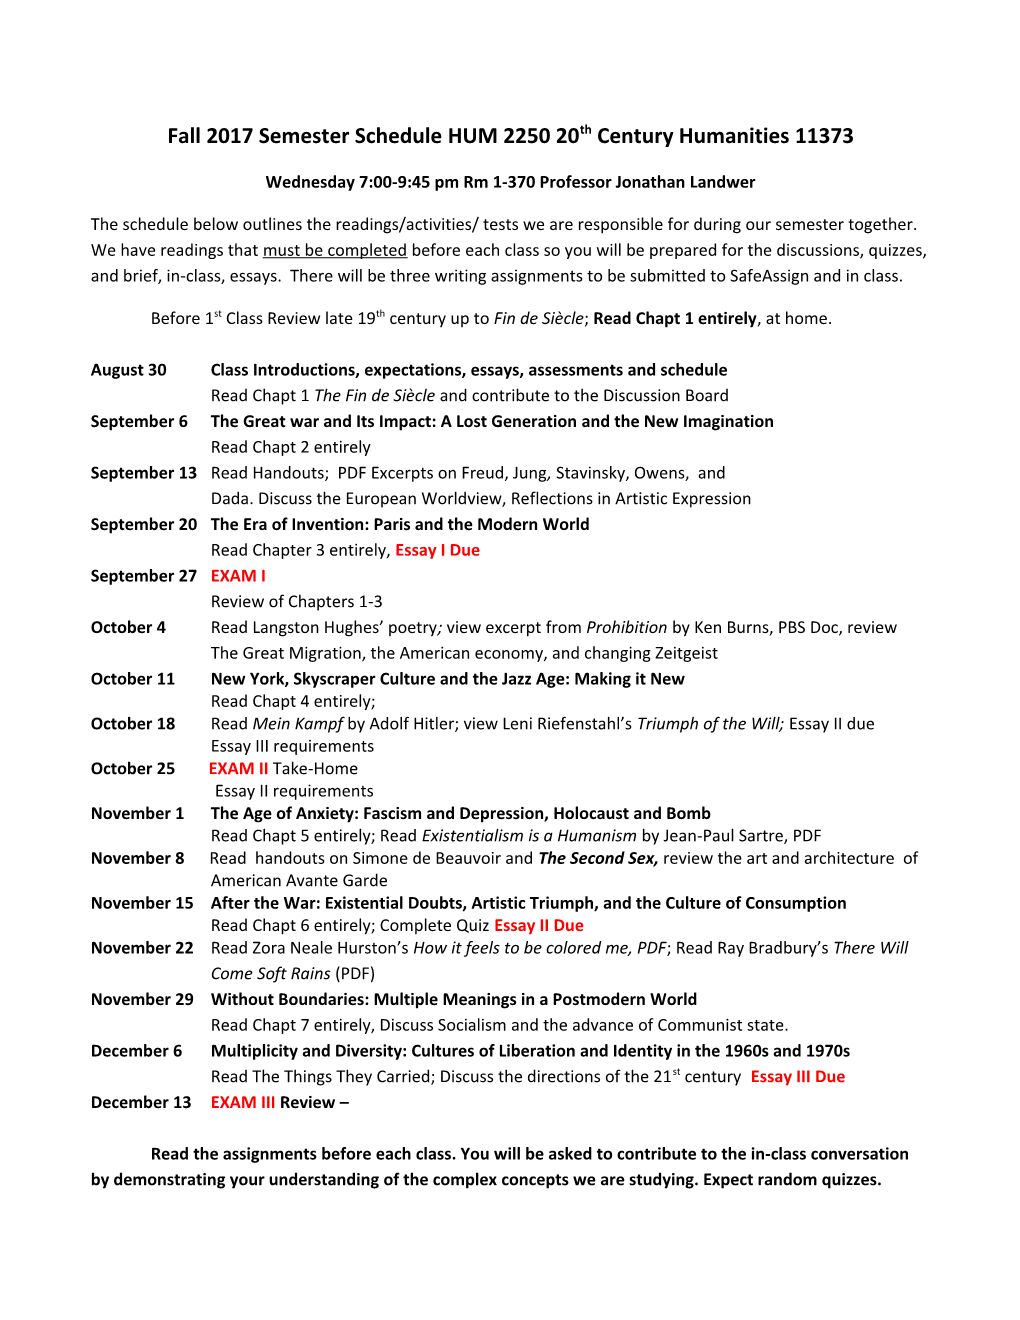 Fall 2017 Semester Schedule HUM 225020Th Century Humanities11373